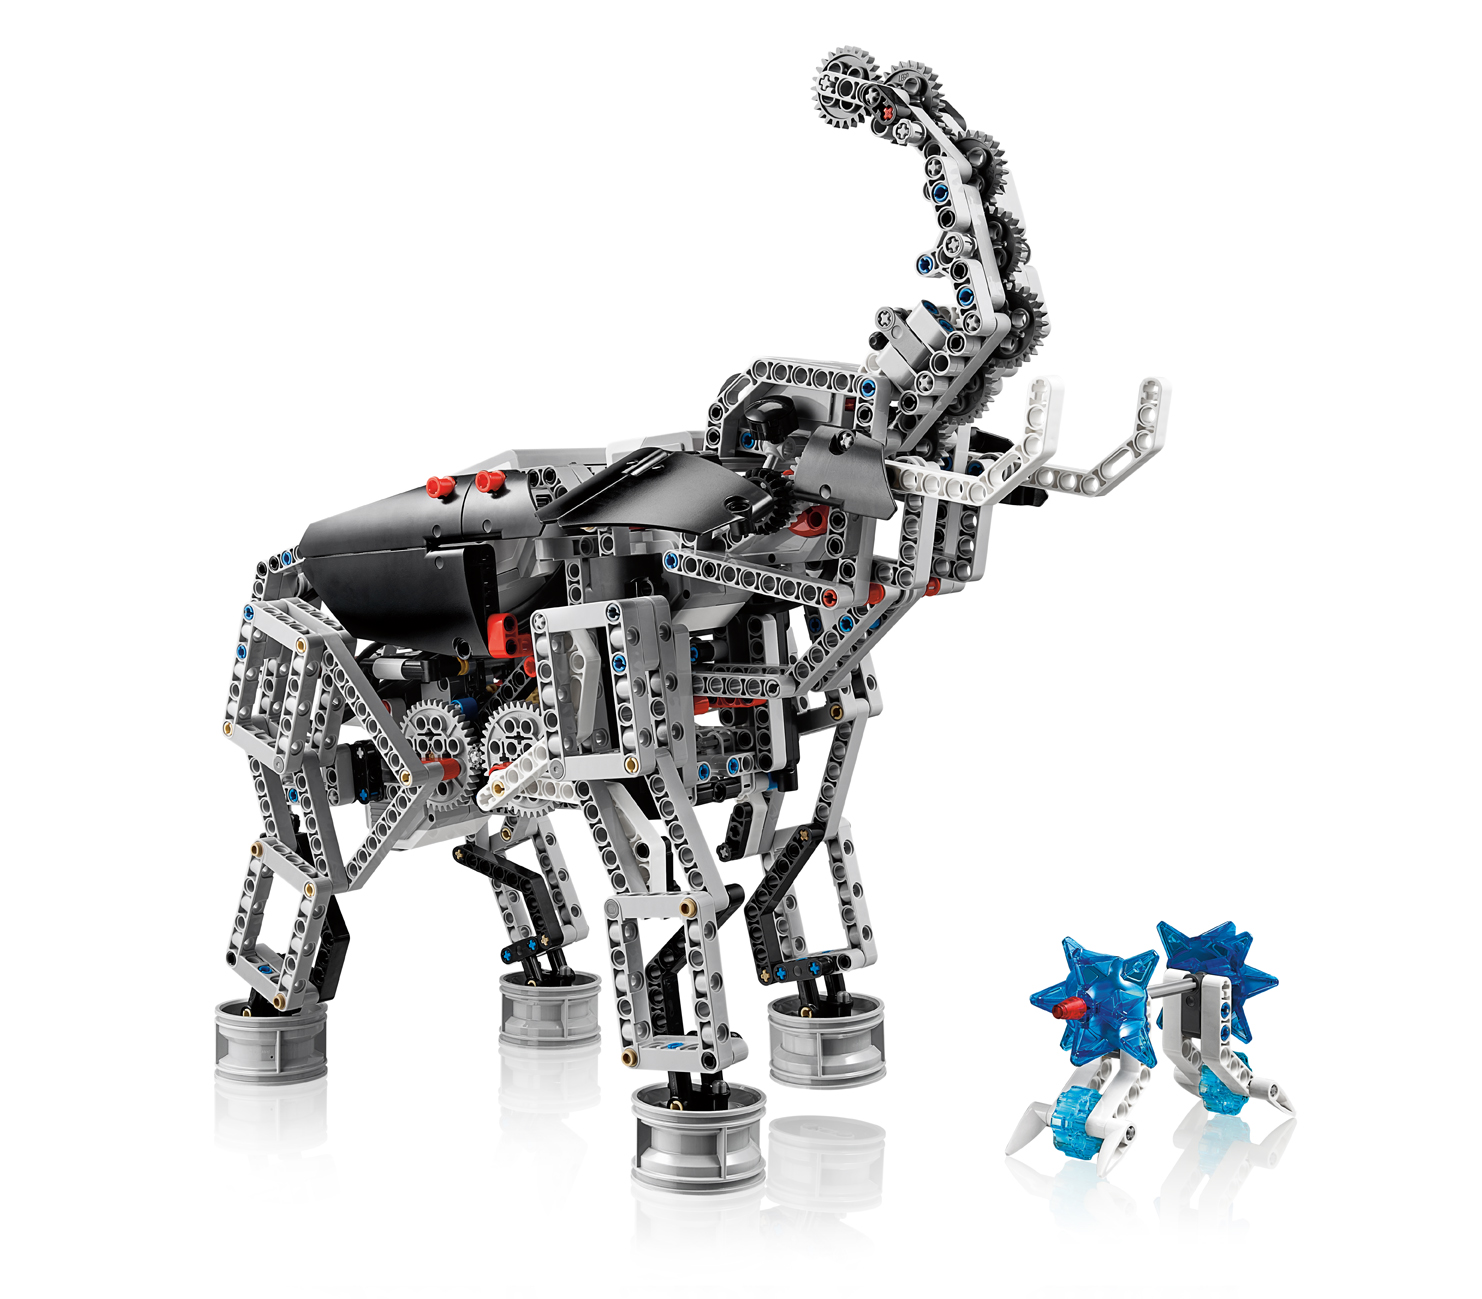 Lego Mindstorms EV3 Education : complementary kit